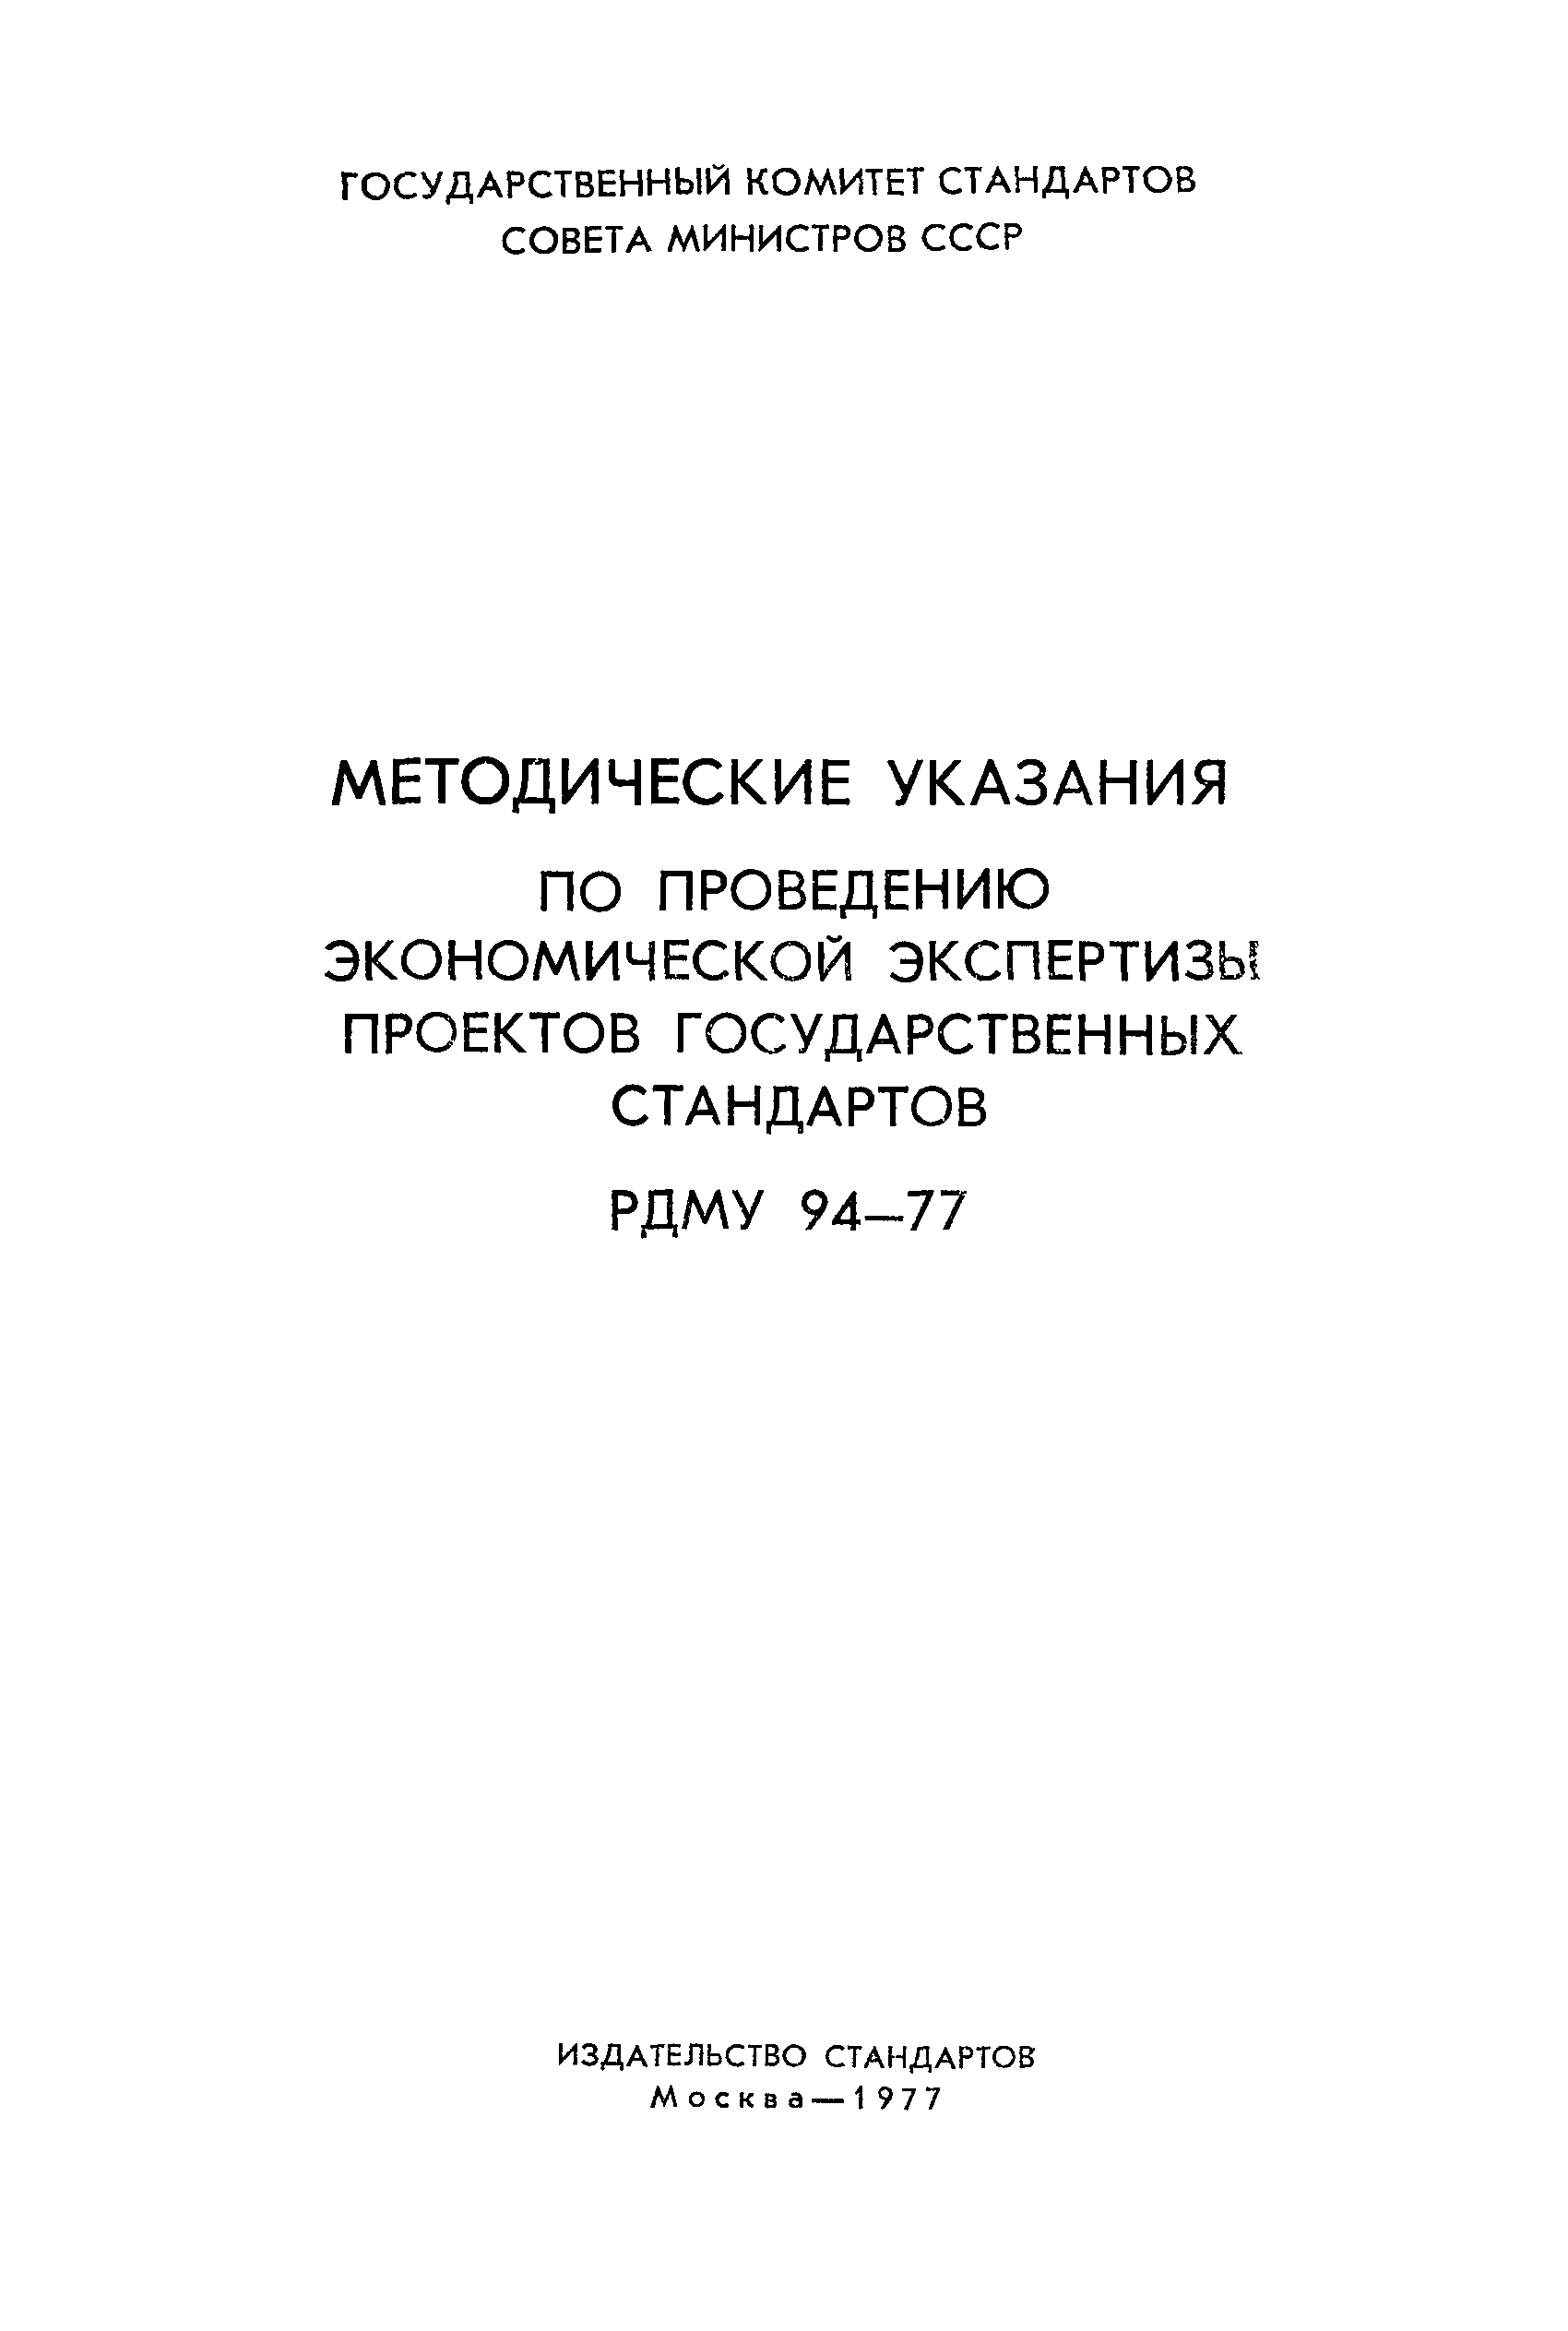 РДМУ 94-77